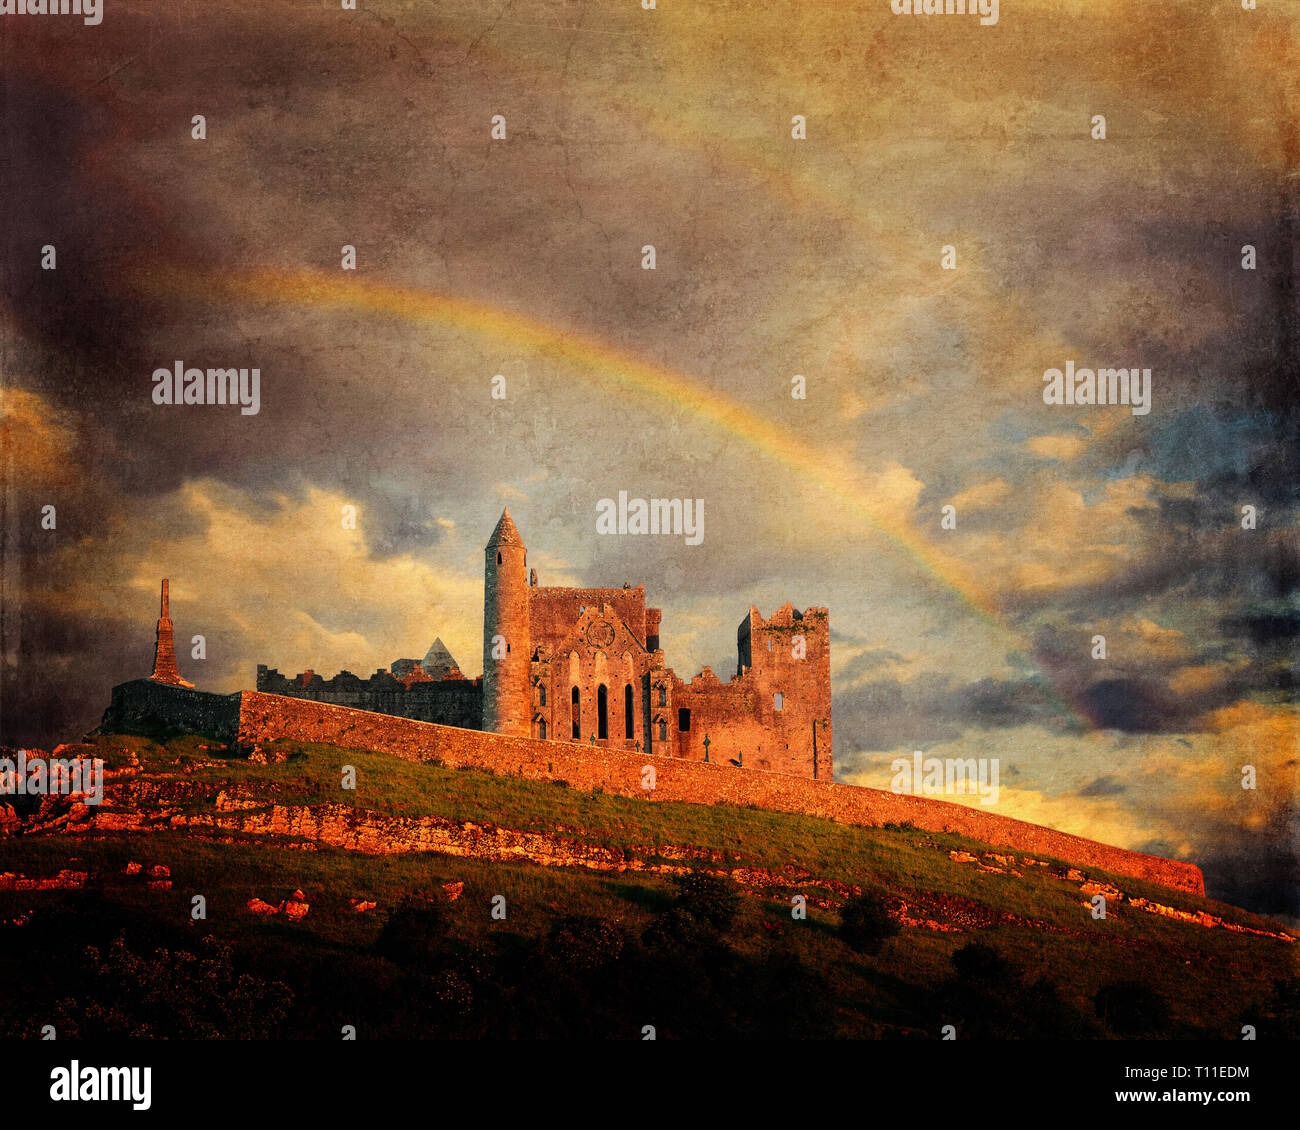 Arte: Rocca di Cashel, Co. Tipperary, Repubblica di Irlanda Foto Stock